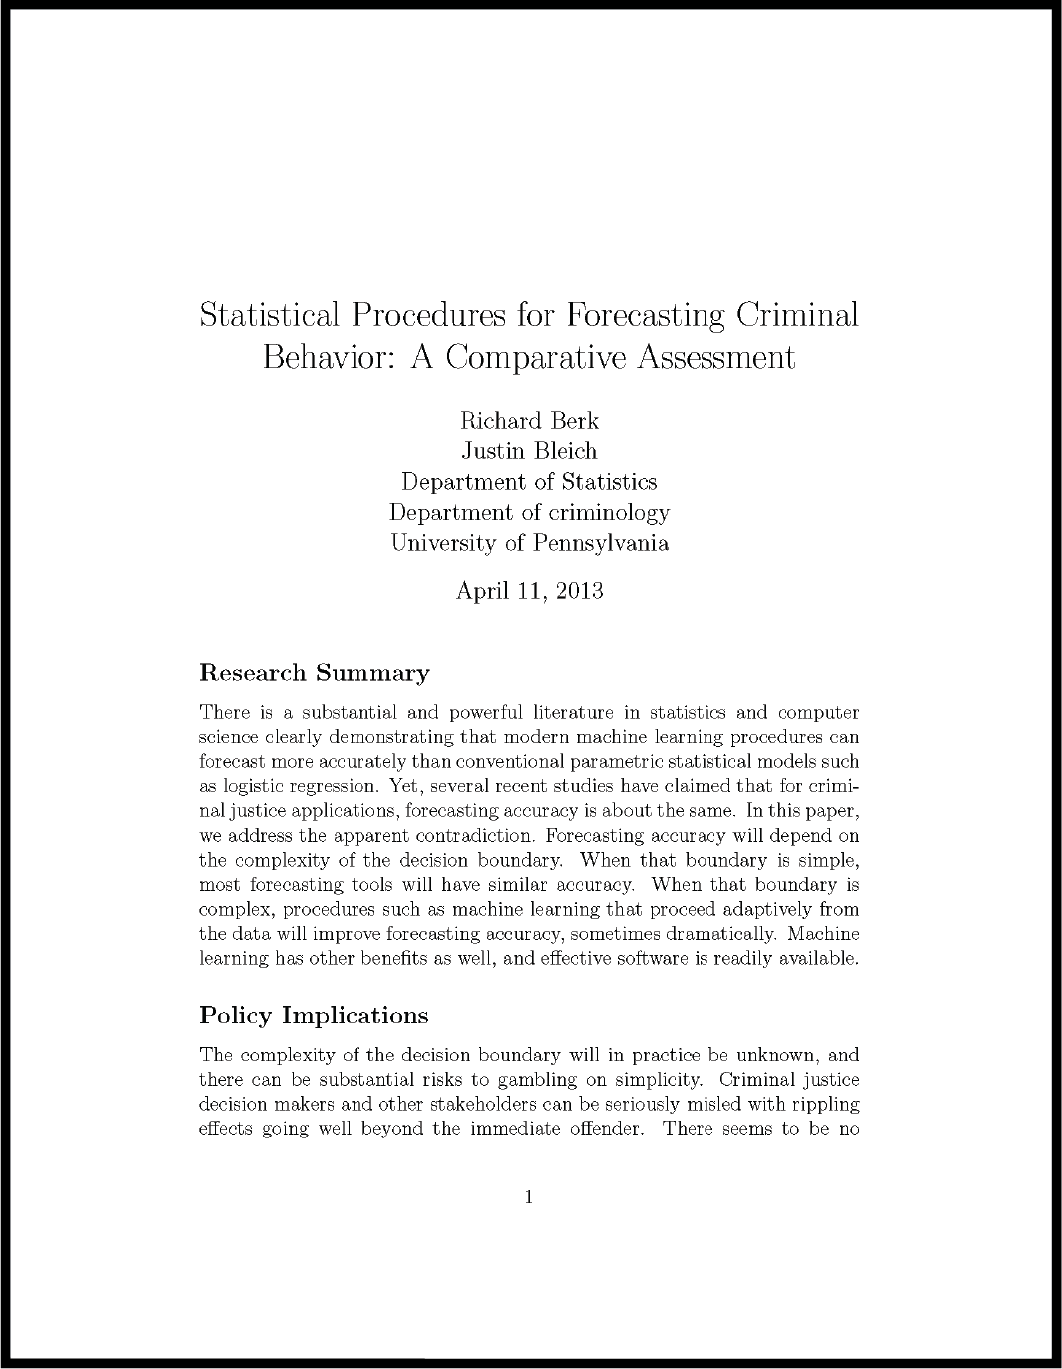 First page of document "Statistical Procedures for Forecasting Criminal Behavior"